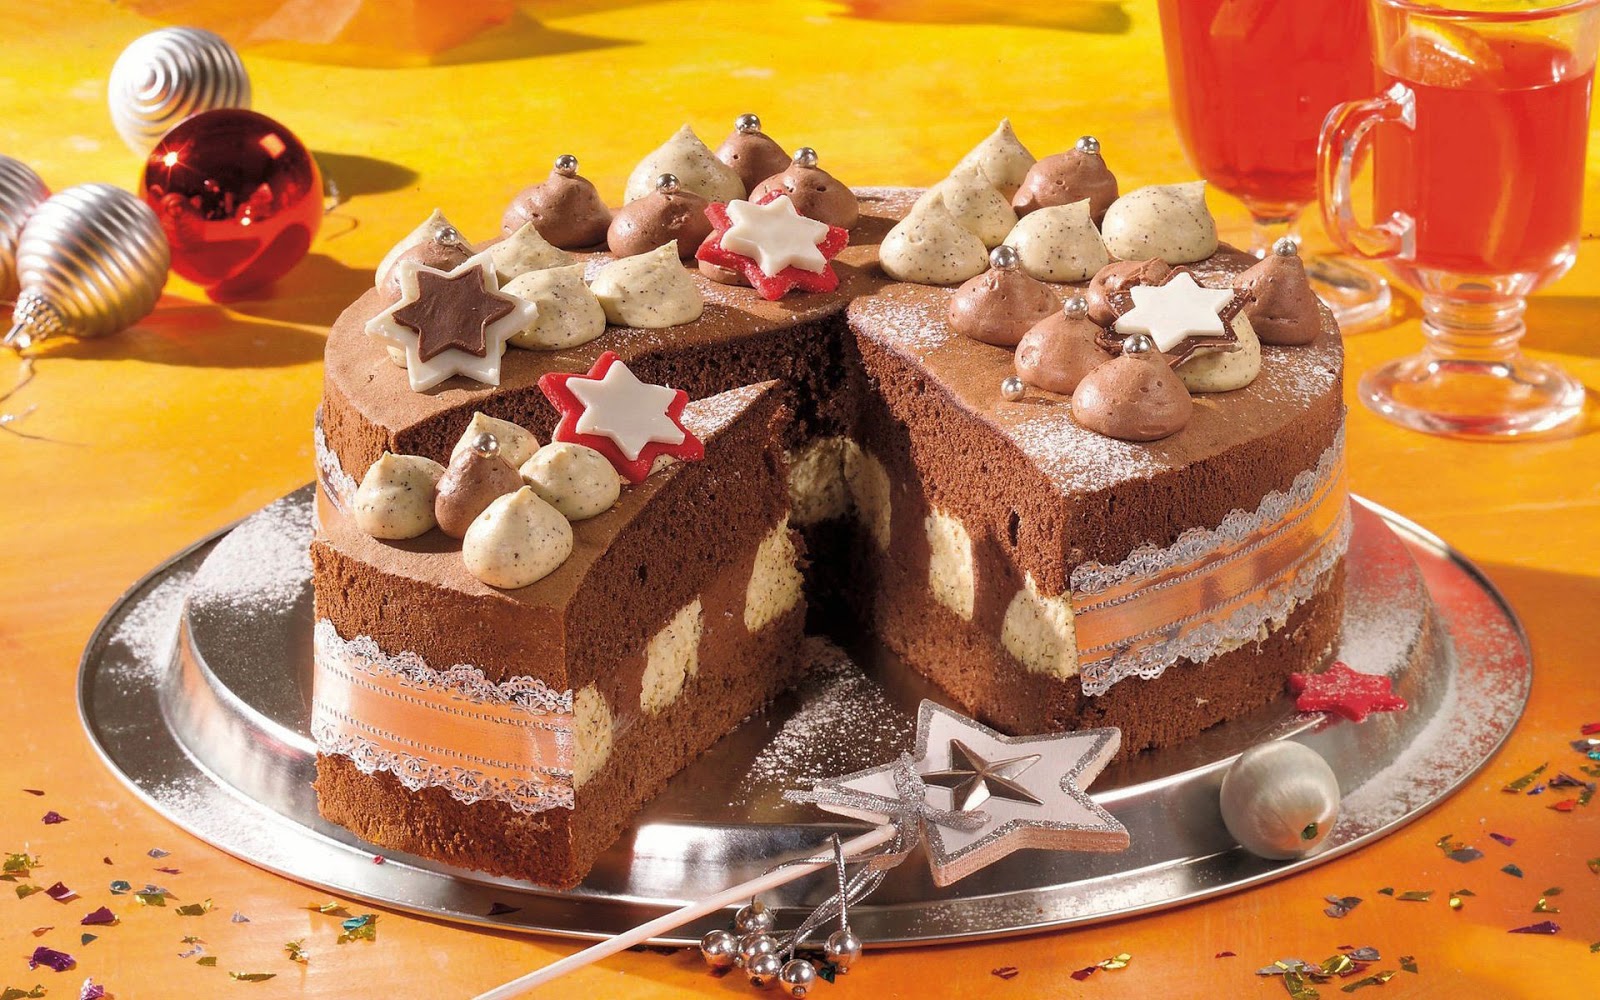 chocolate cake photos free download